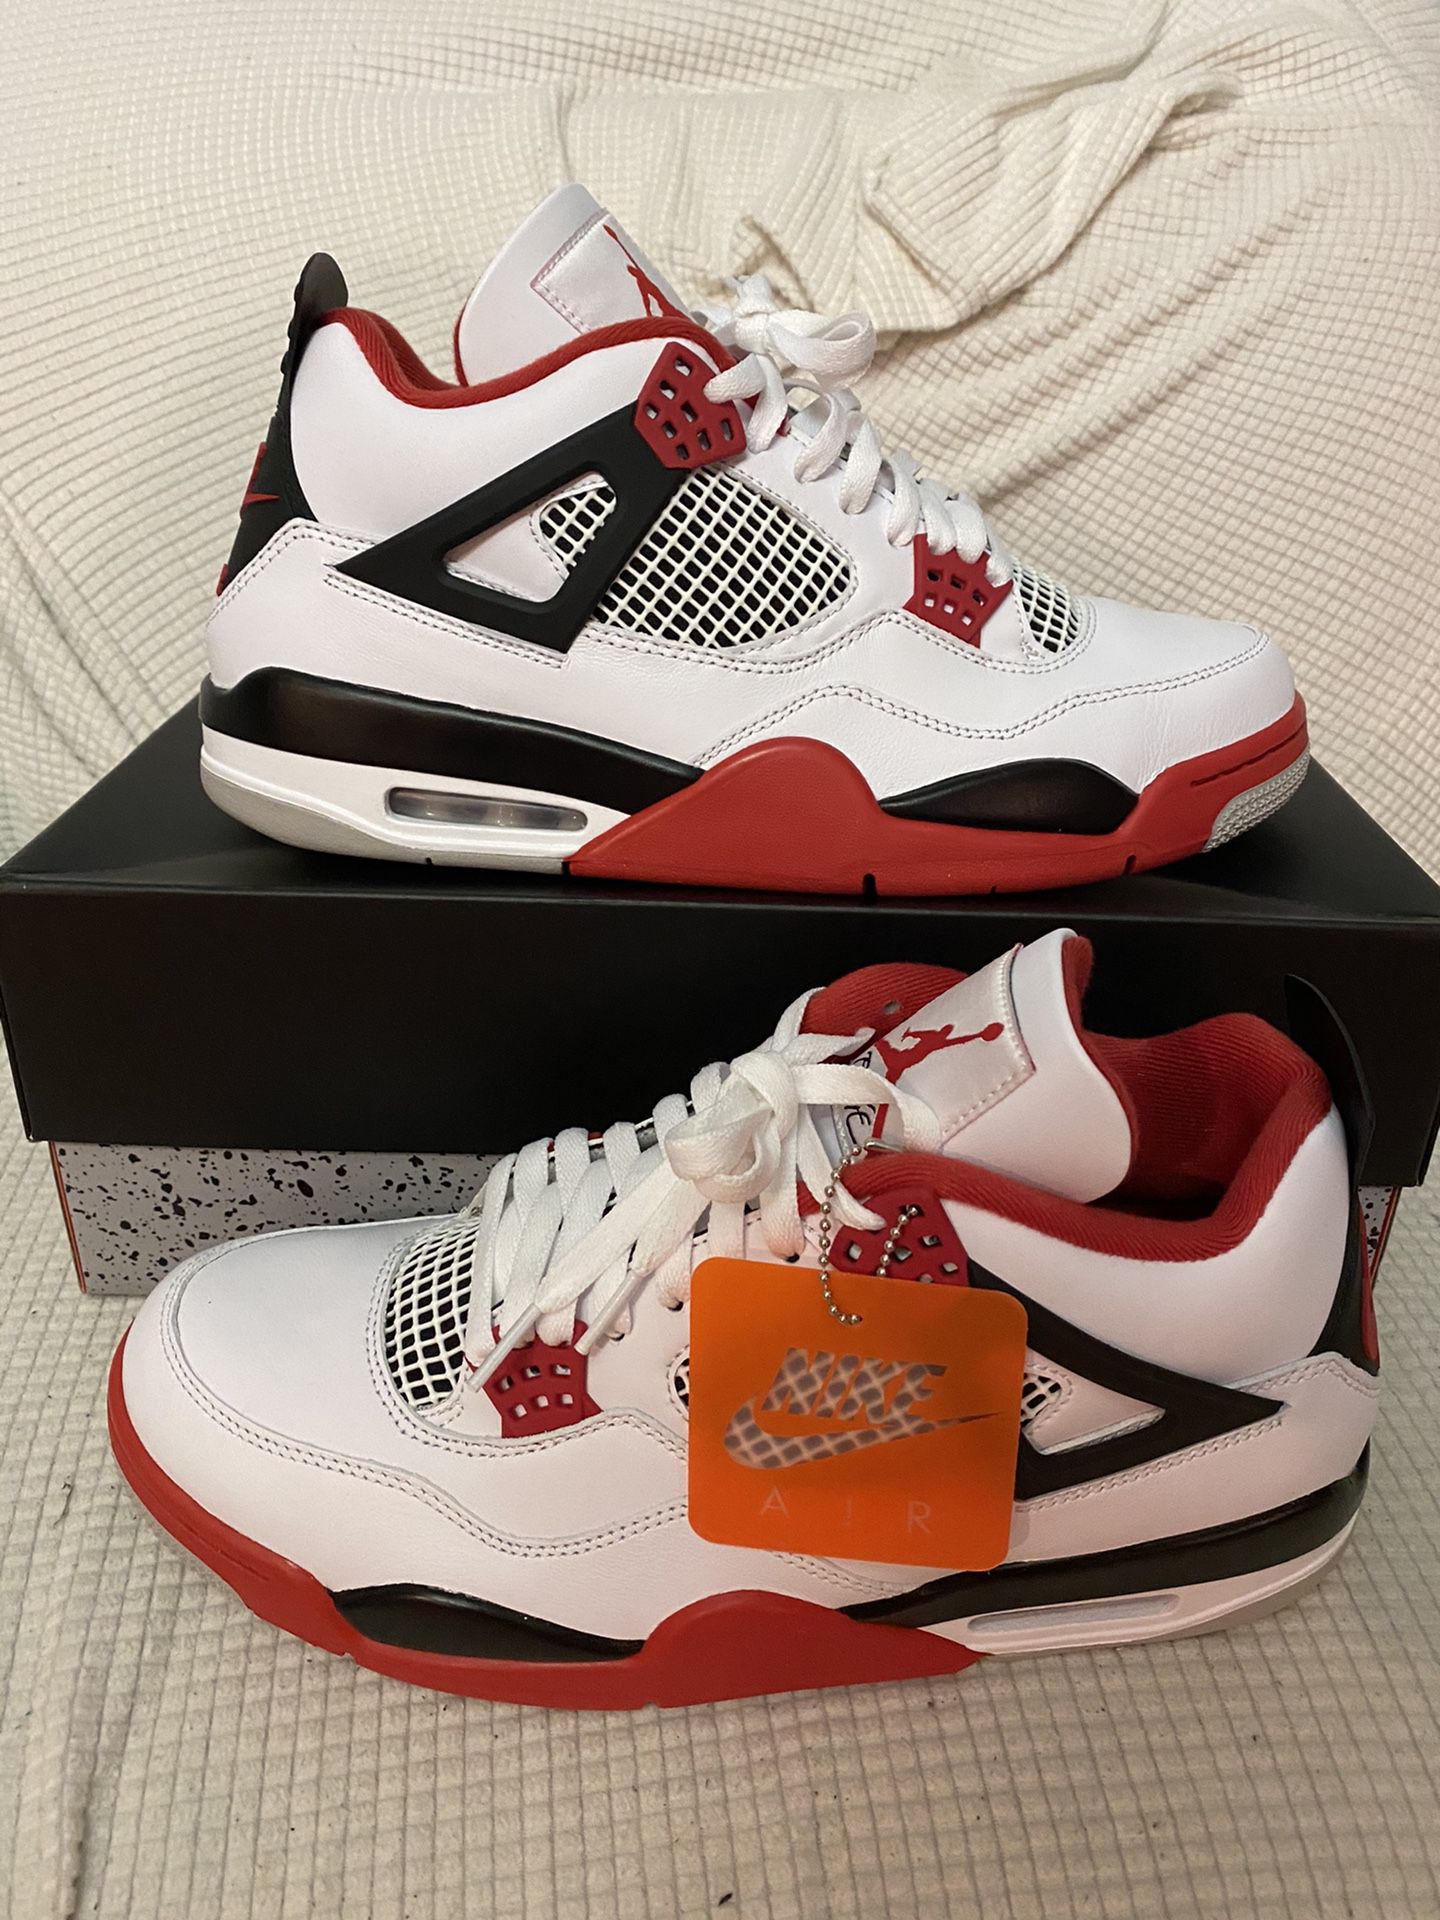 Air Jordan Retro 4 “ Fire Red “- Size 11.5